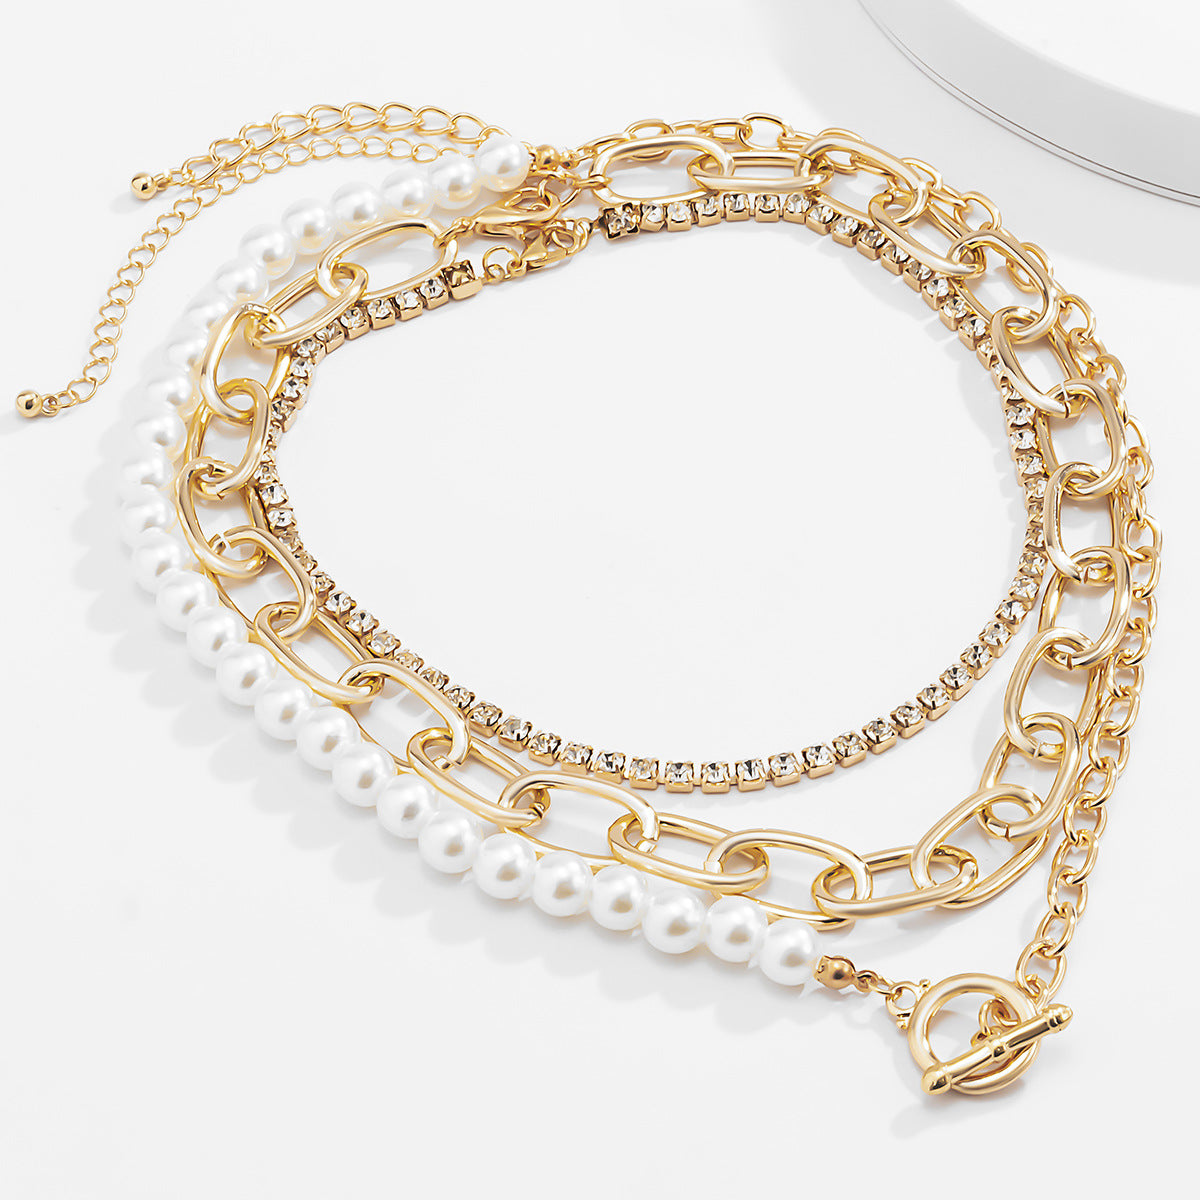 Gorgeous 3-Piece Vintage Necklace Set with Bold Chain, Faux Diamond & Pearl for Women - Retro Original Design